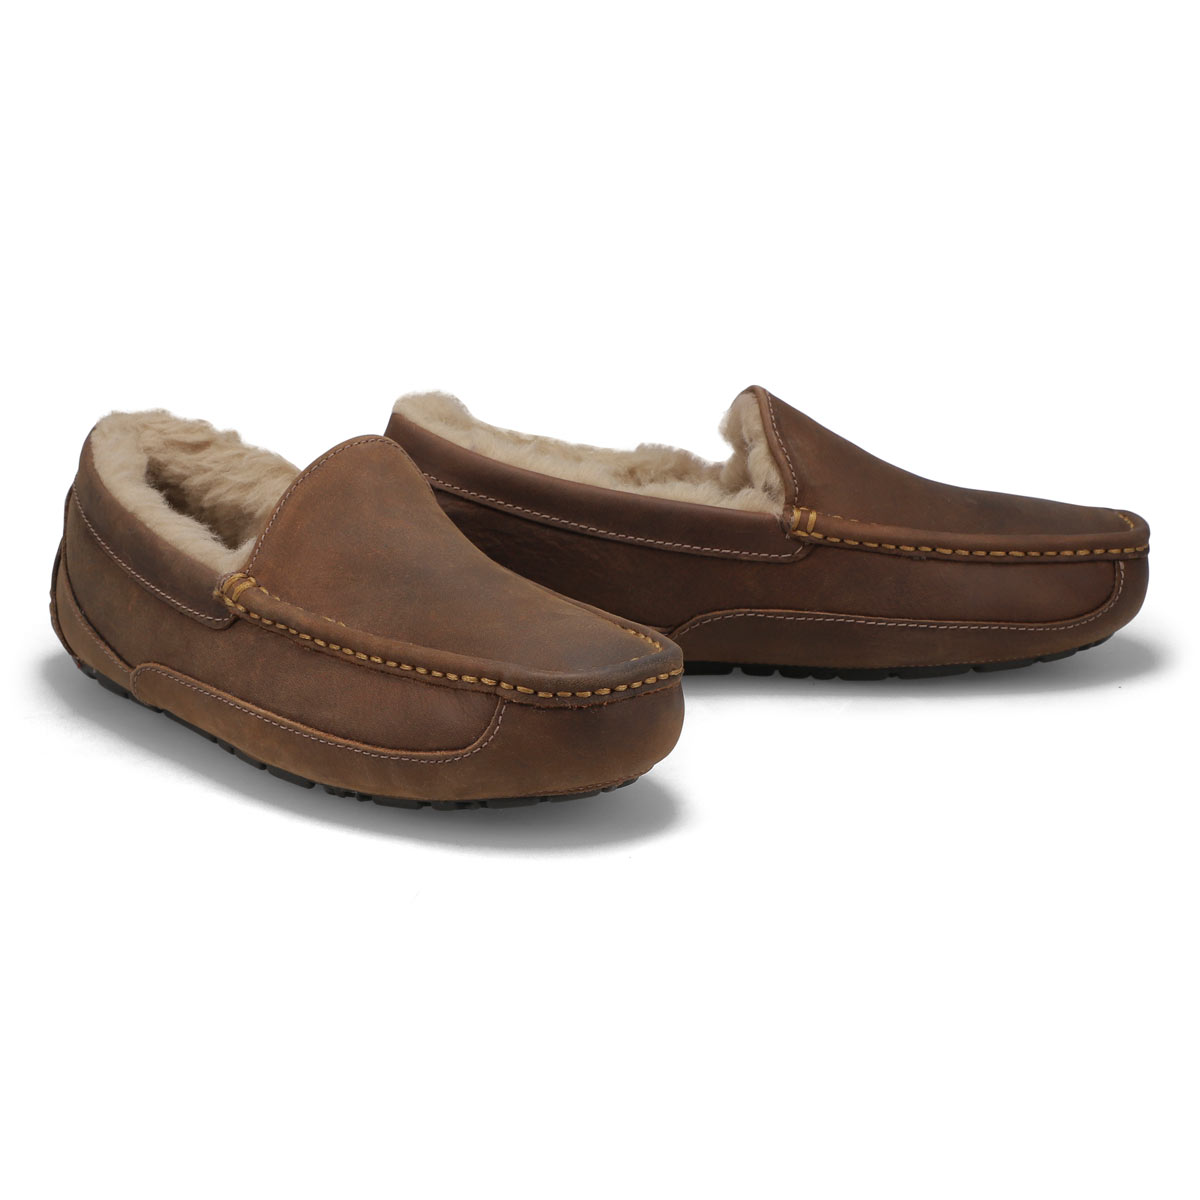 Men's ASCOT tan sheepskin slippers